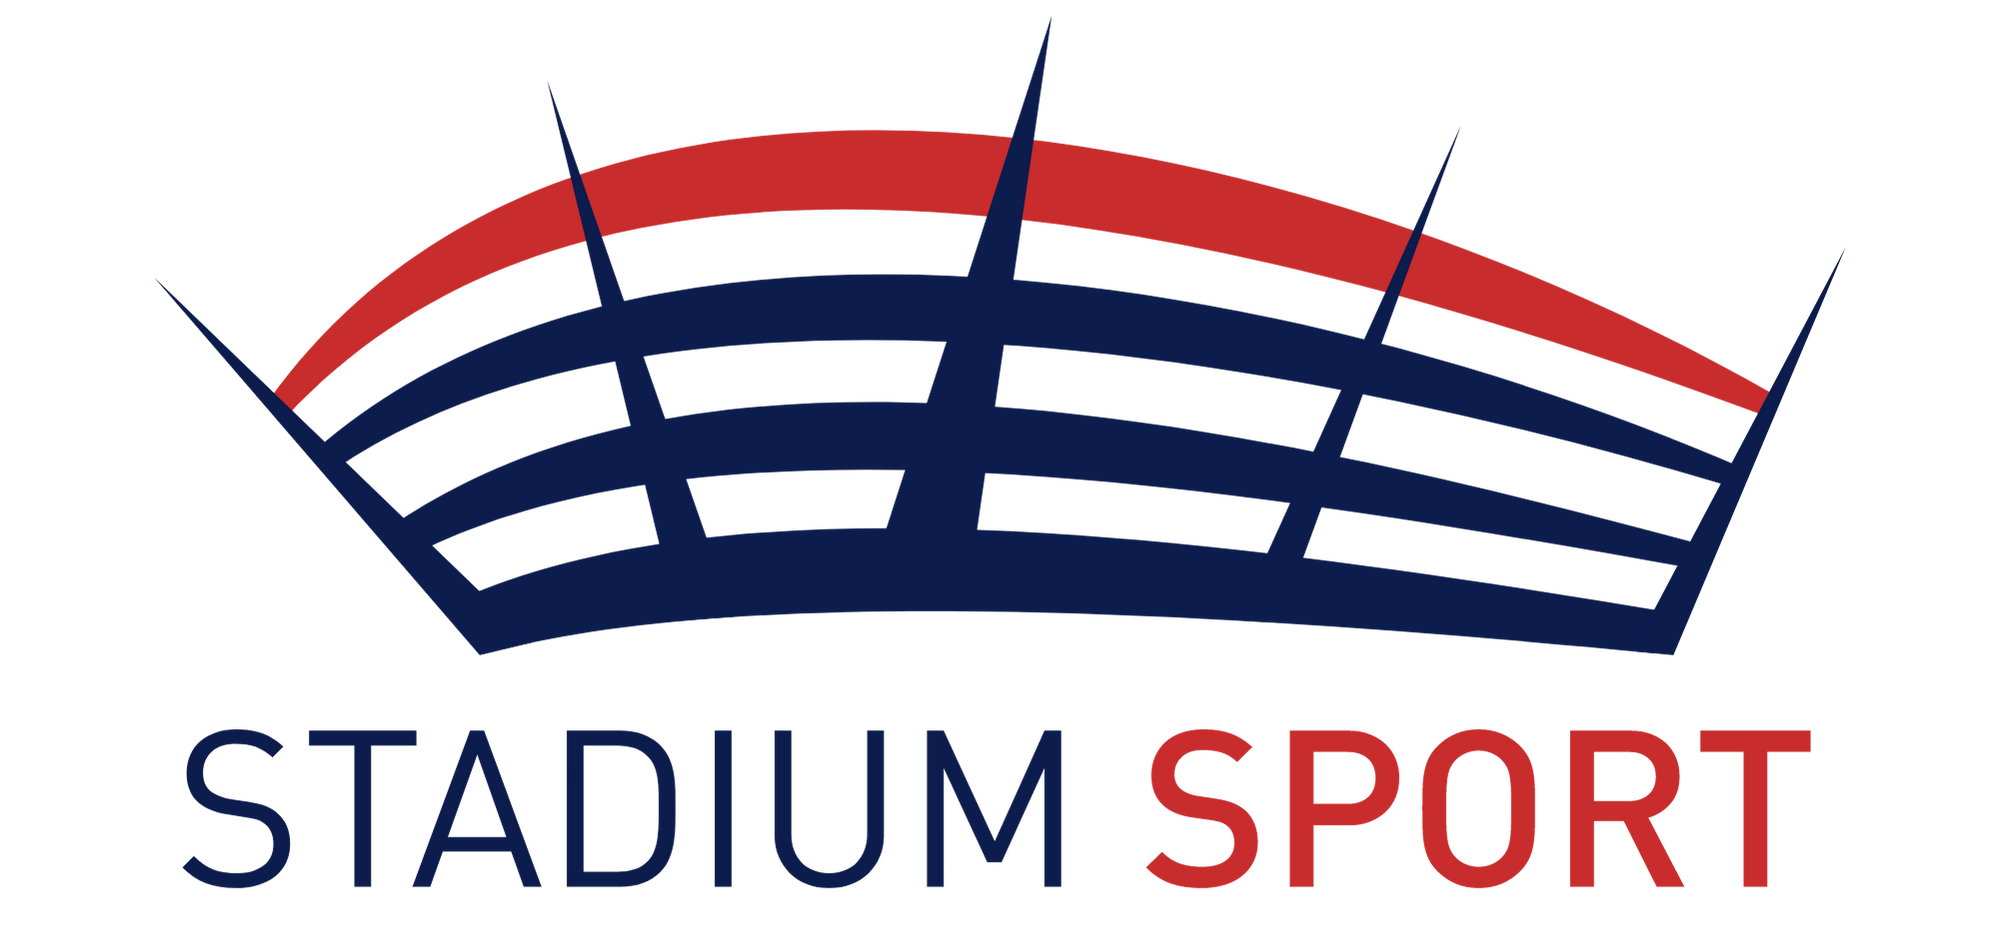 Shop Indigenous Games Equipment South Africa | Stadium Sport